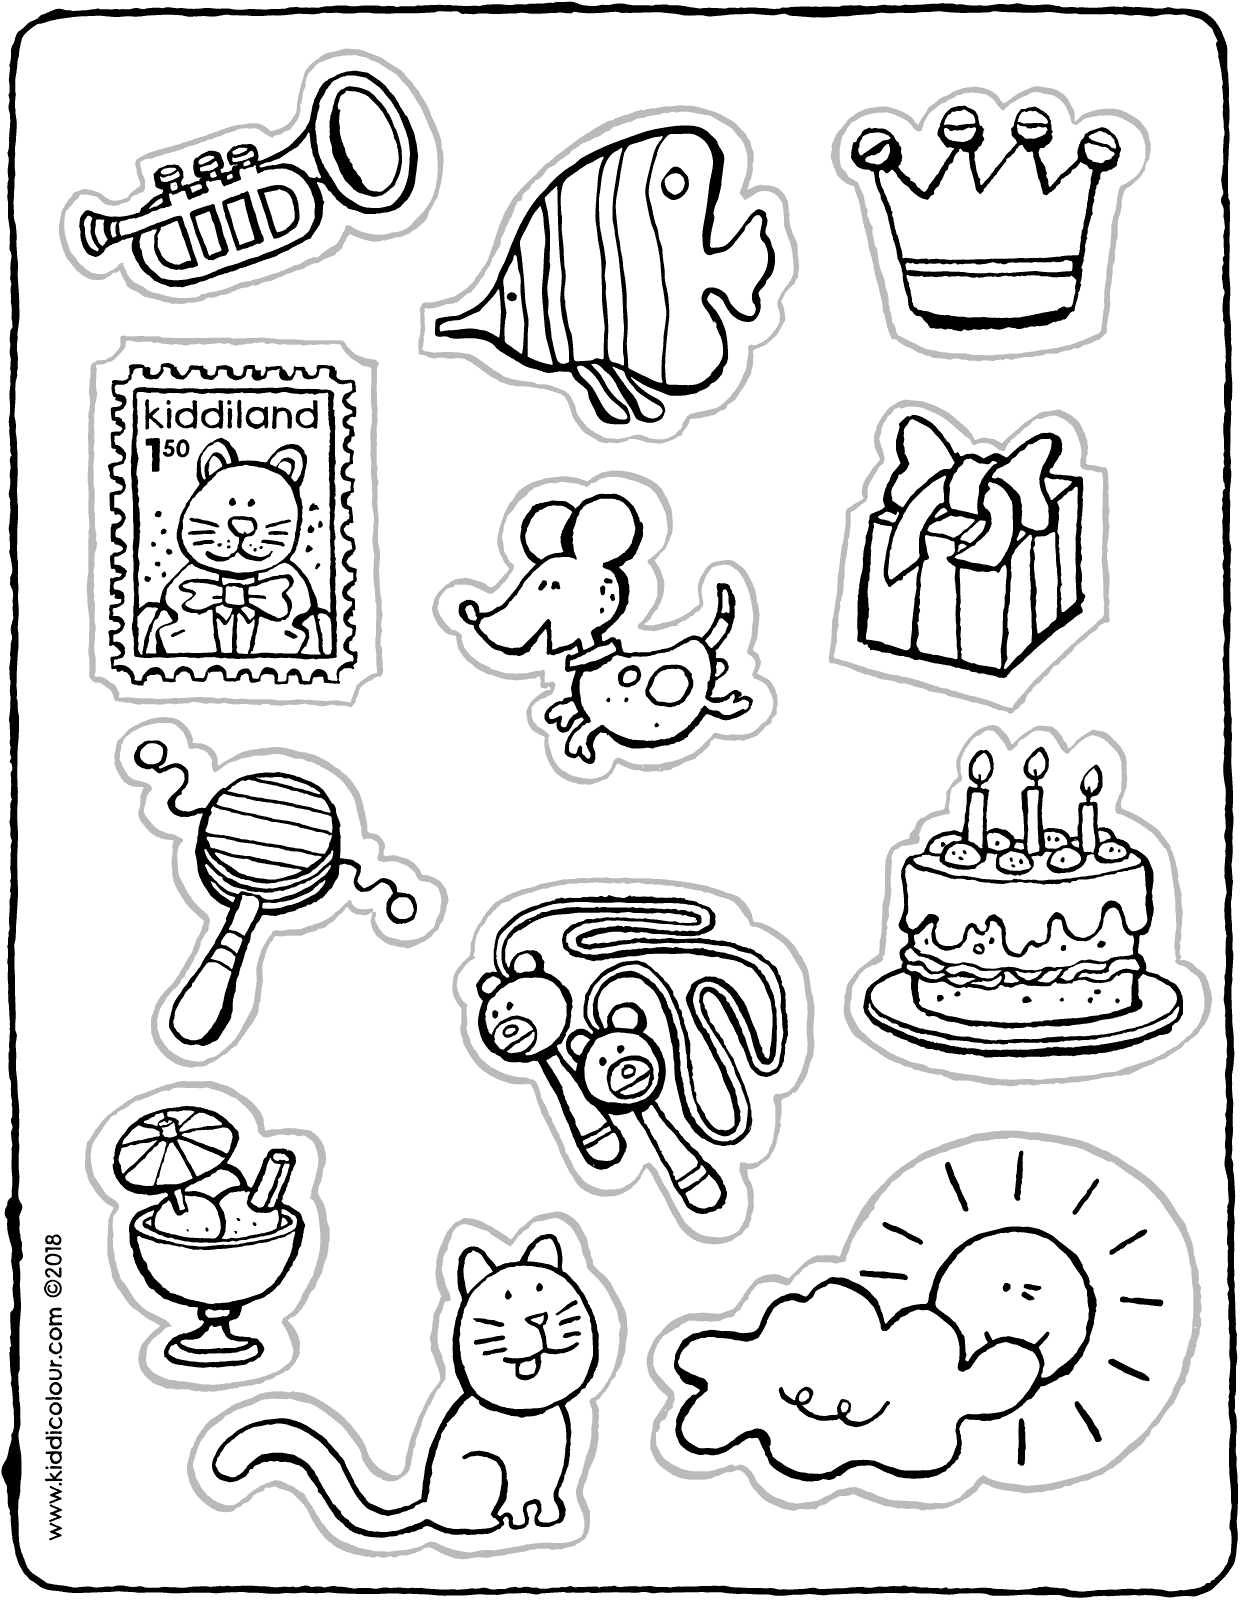 stickers - kiddicolour